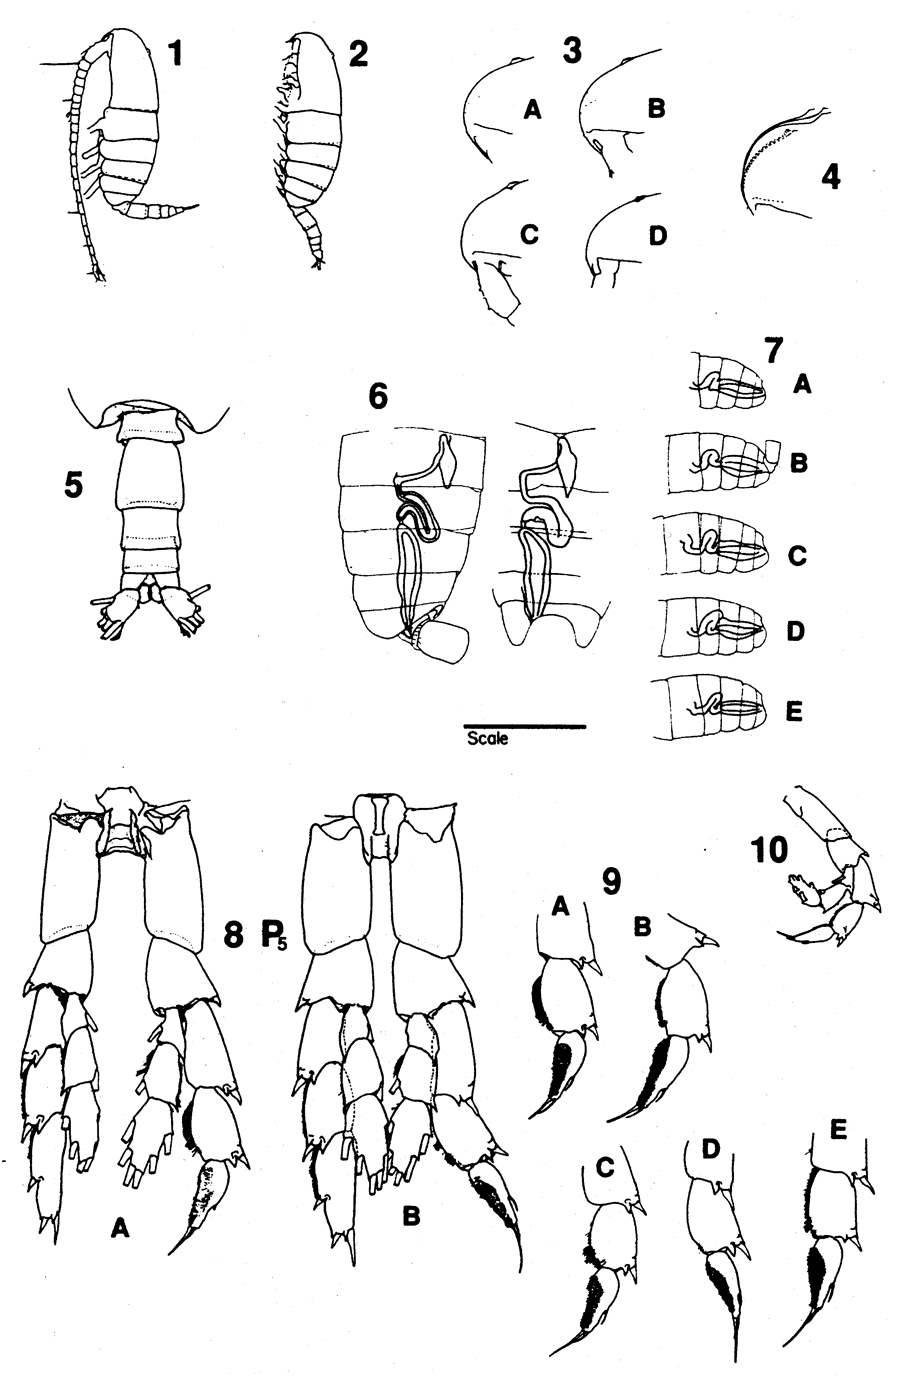 Species Neocalanus flemingeri - Plate 6 of morphological figures